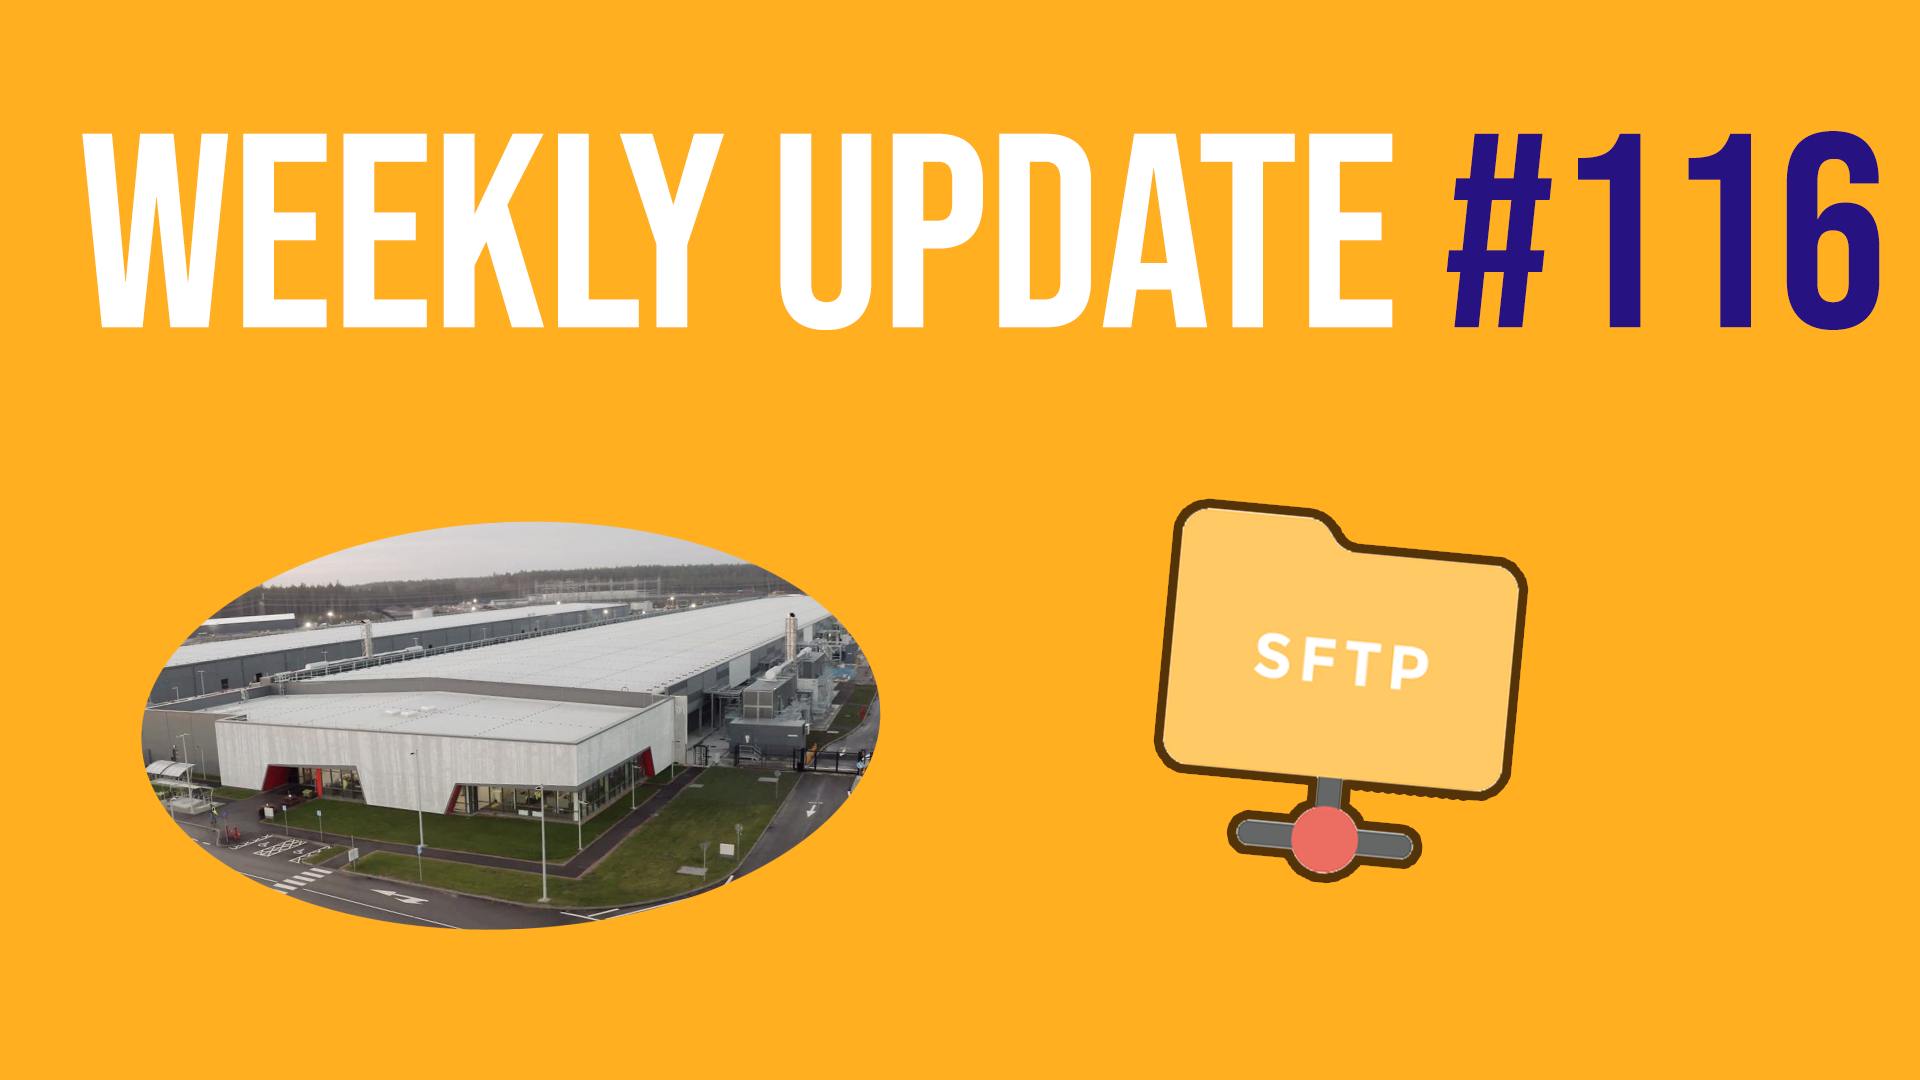 Weekly Update #116 - We have SFTP in Azure!